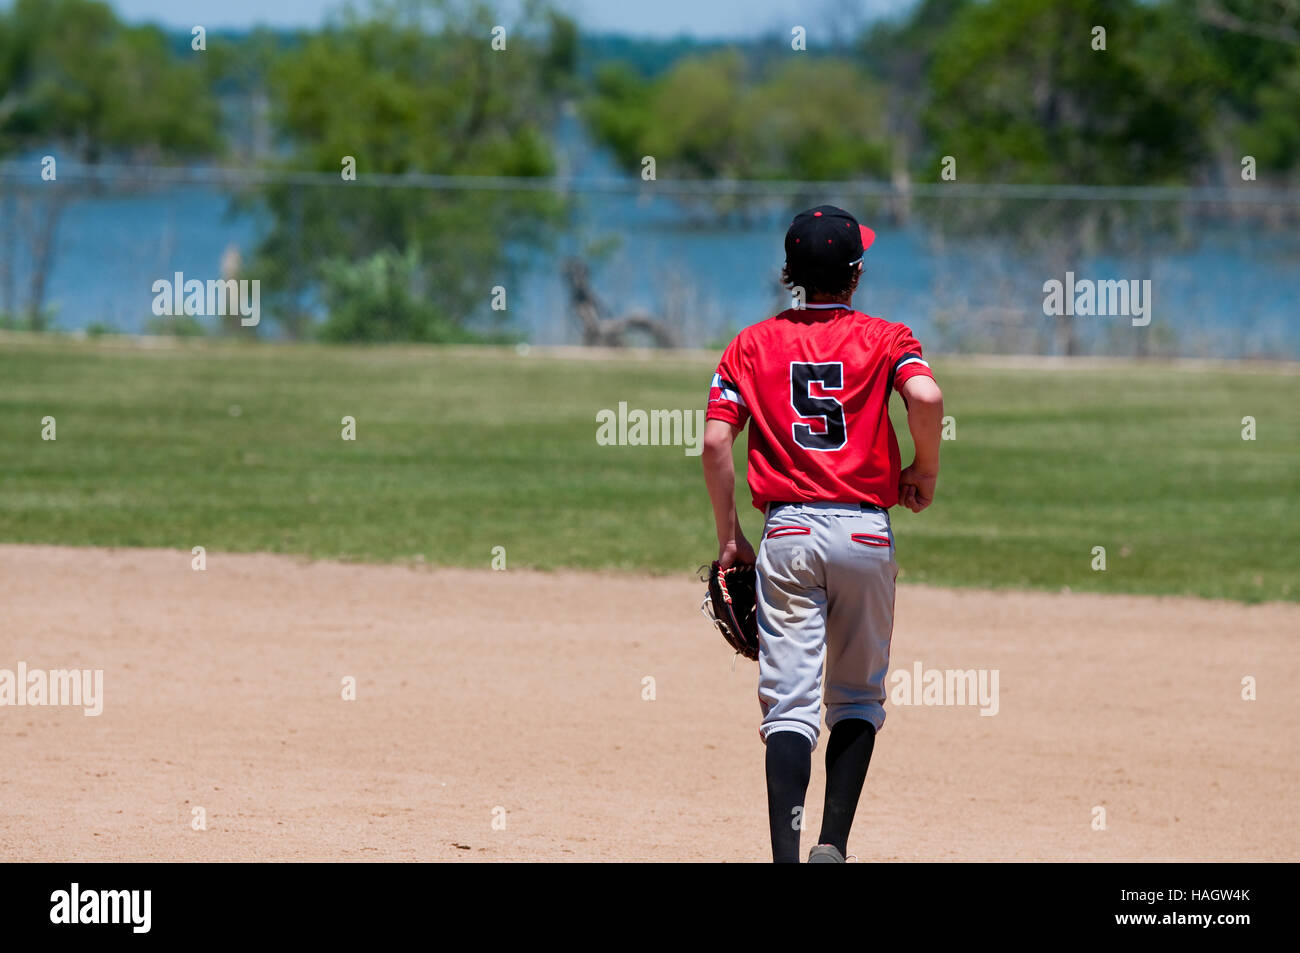 American youth baseball player running on field. Stock Photo